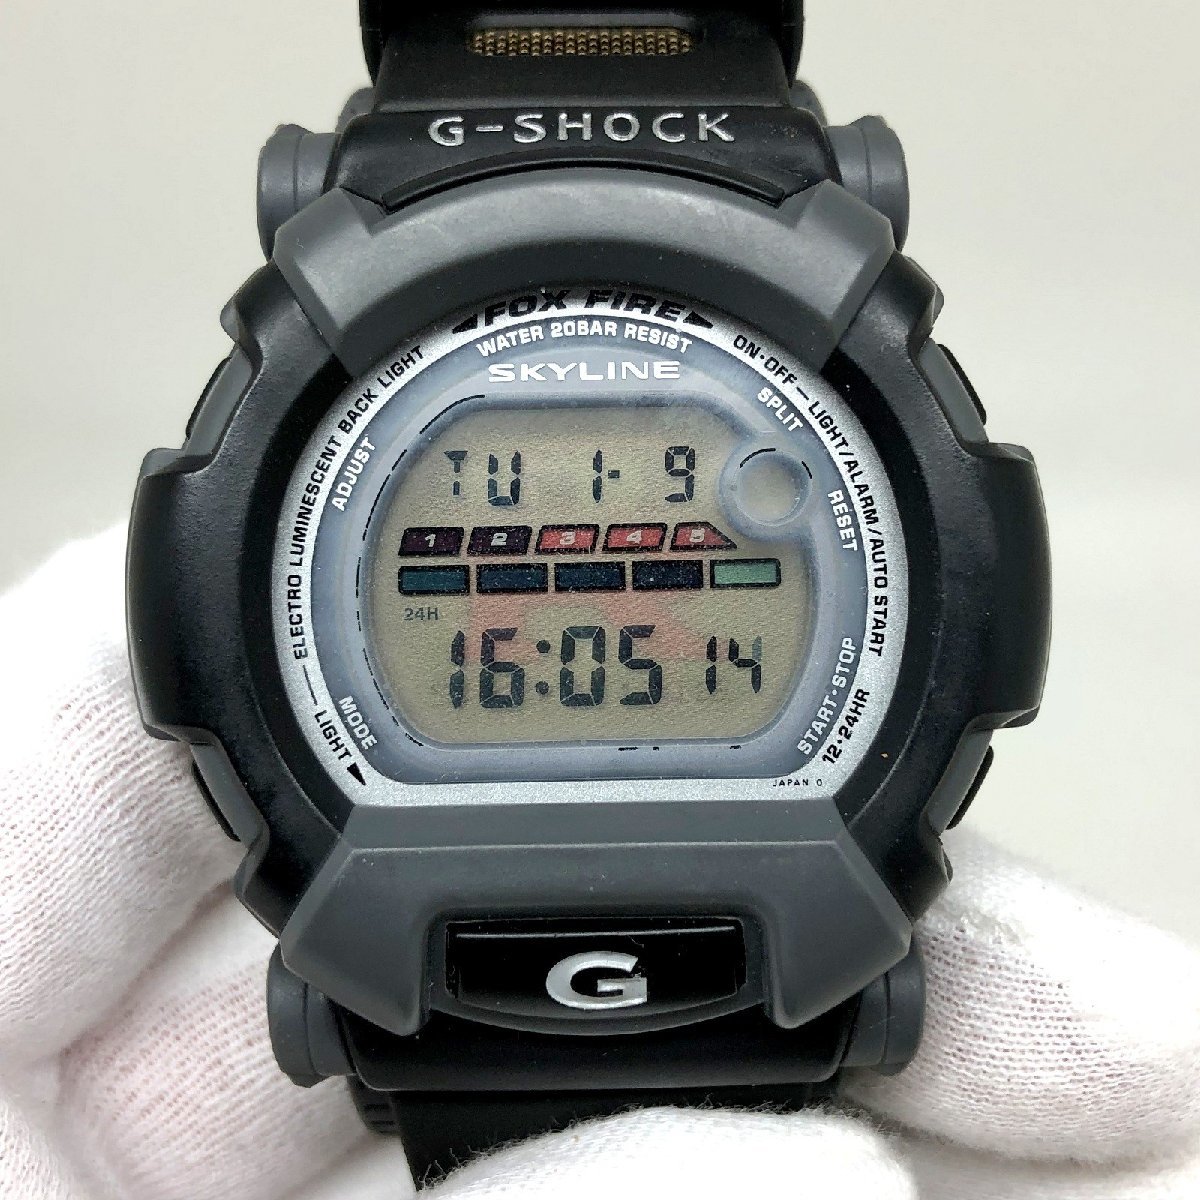 Yahoo!オークション -「g shock gt-r」(コラボレーションモデル) (G 